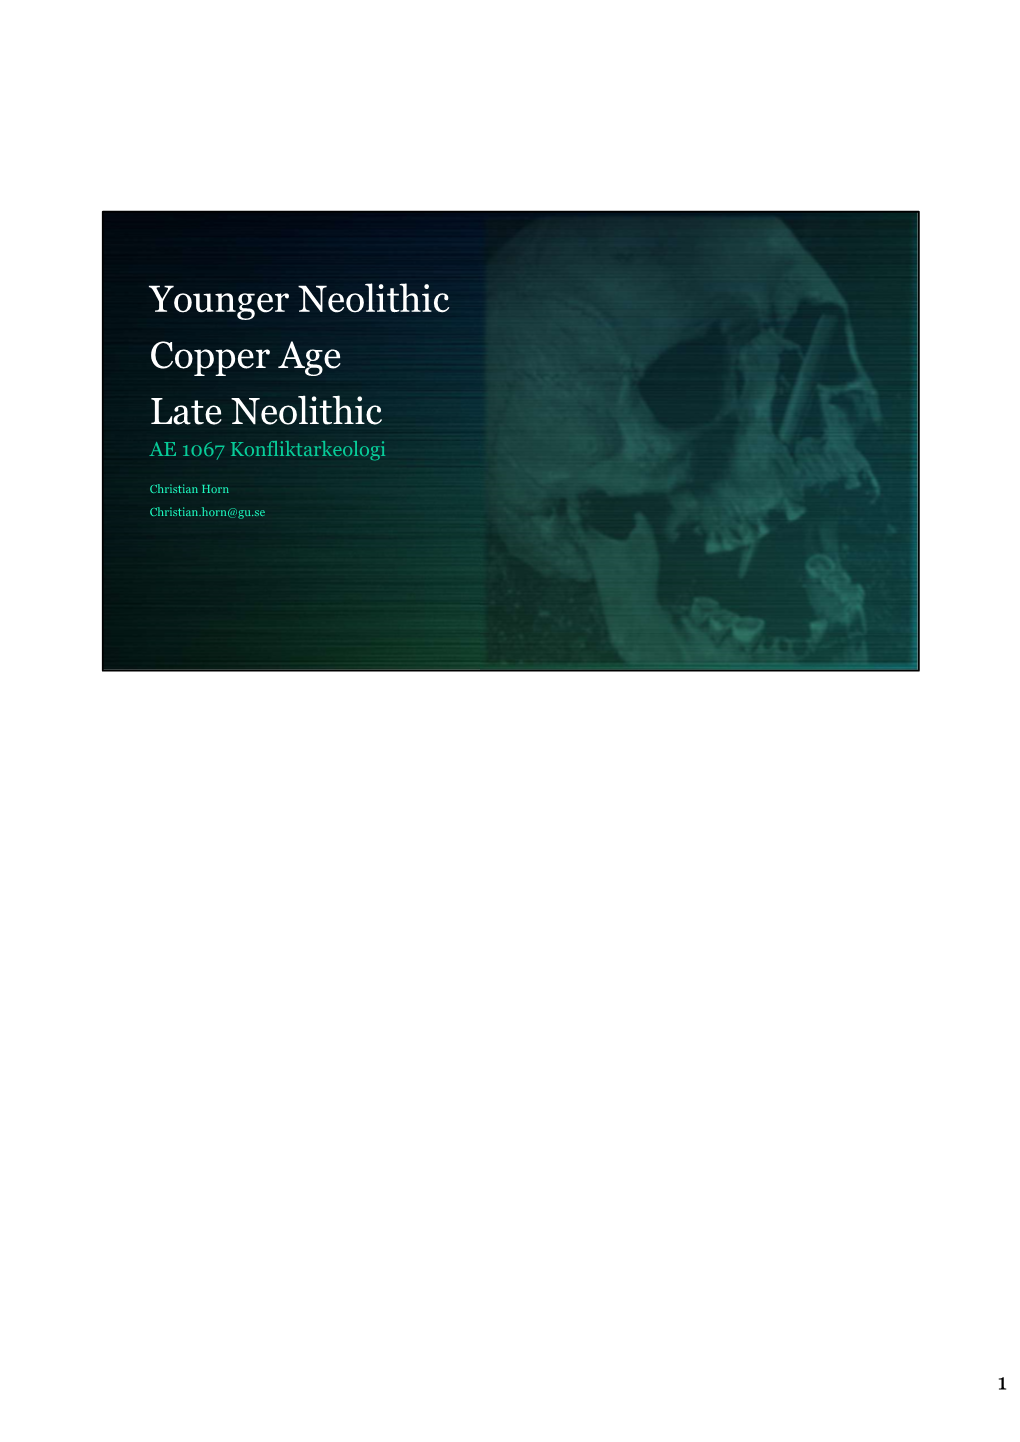 Younger Neolithic Copper Age Late Neolithic AE 1067 Konfliktarkeologi